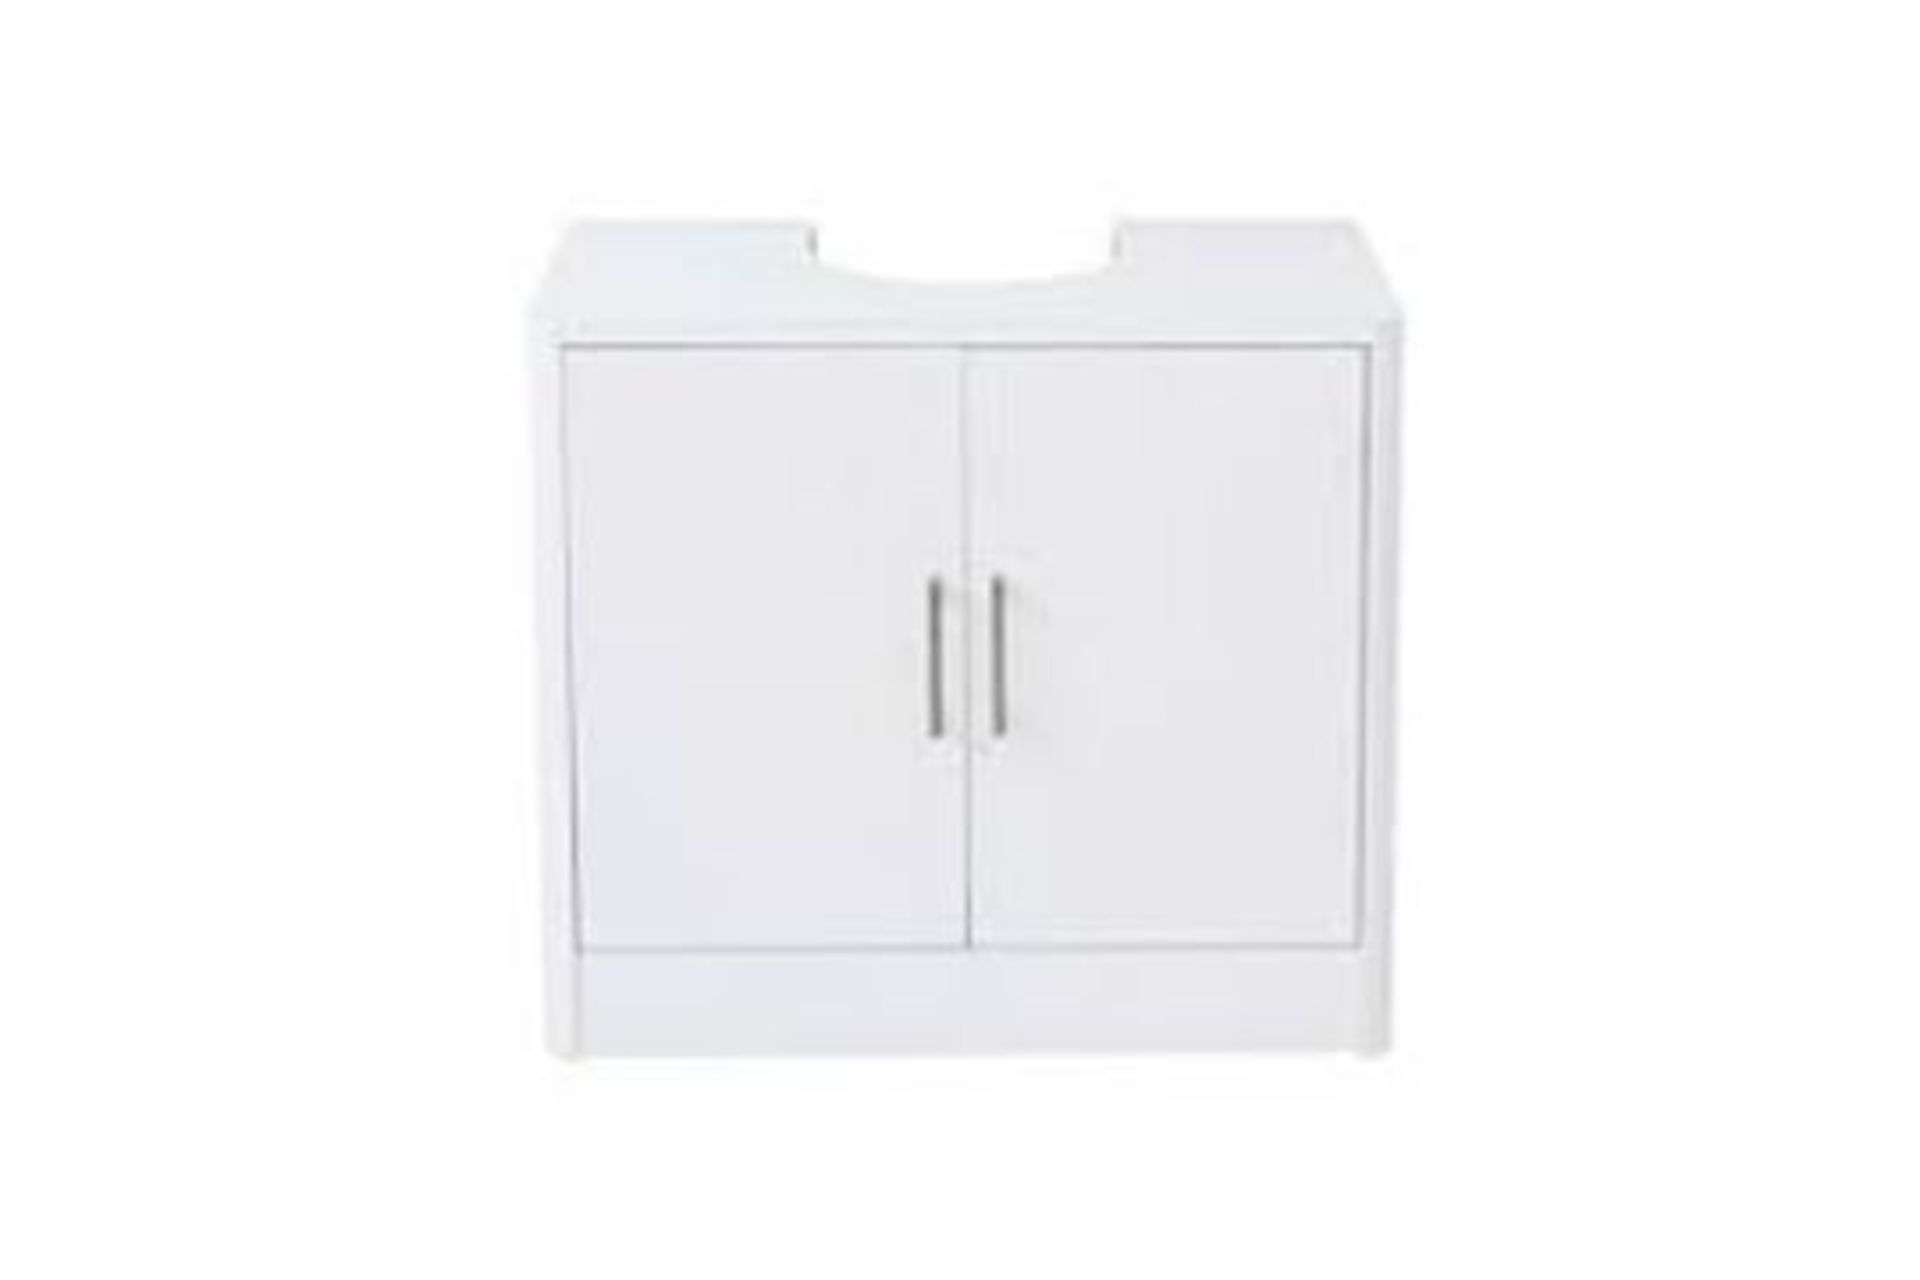 Middy 2-Door White Gloss Under Sink Basin Cabinet. - BI. This Glossy Under Sink Bathroom Cupboard